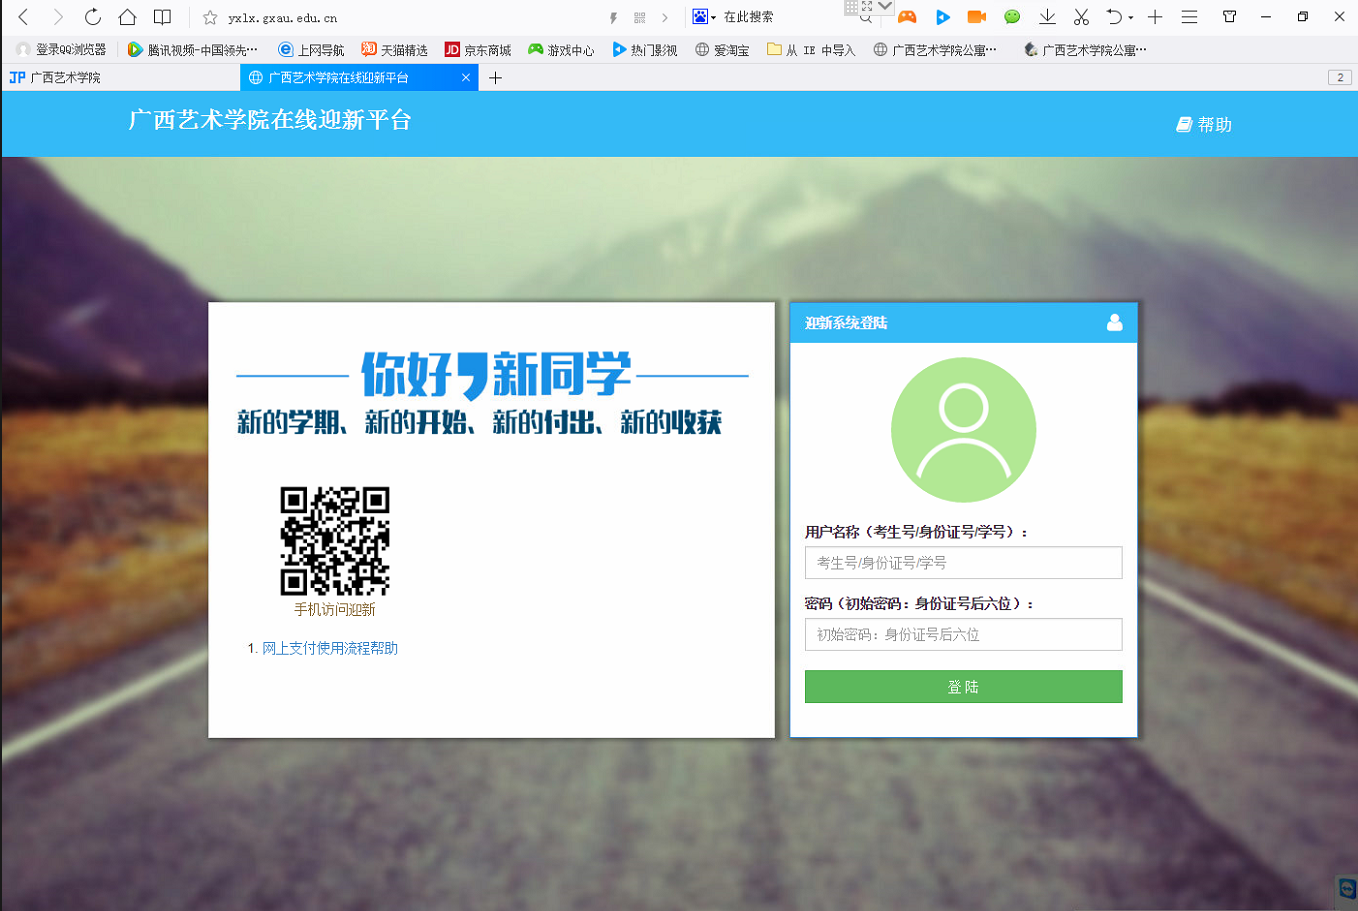 cn/(也可登录广西艺术学院官网主页,点数字化校园/迎新系统链接登录